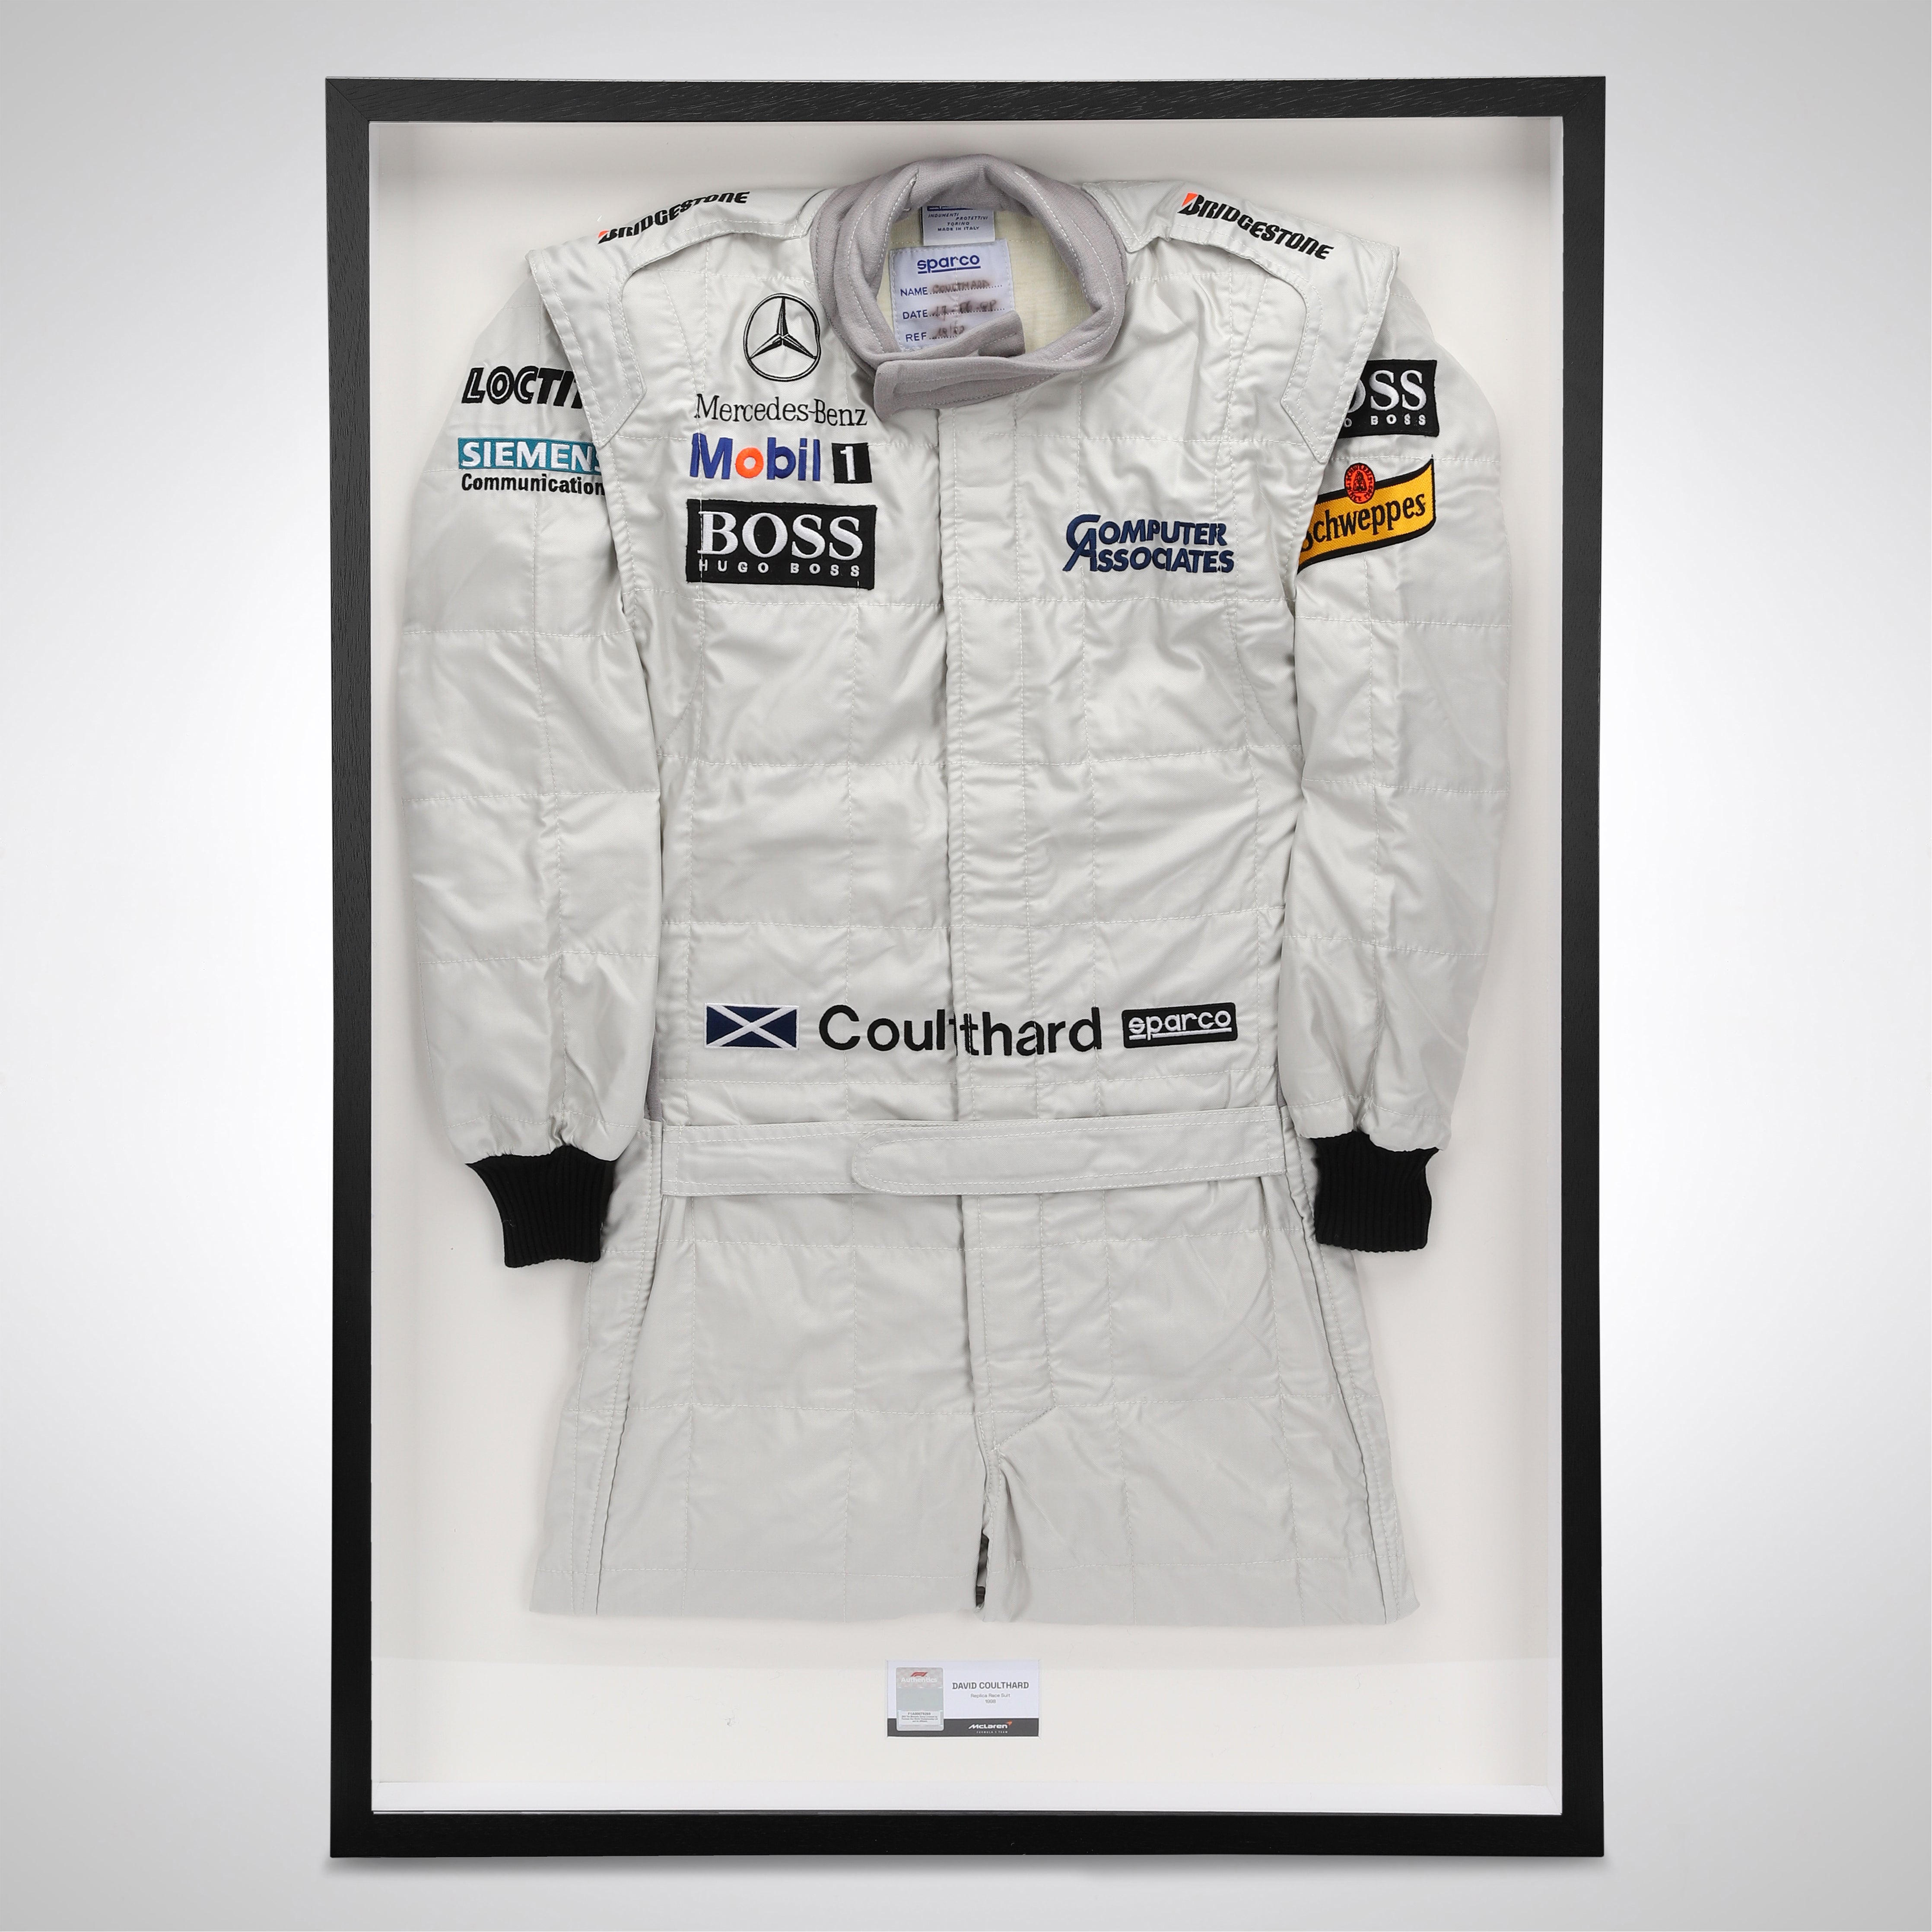 David Coulthard 1998 McLaren F1 Team Replica Race Suit with Computer Associates & Schweppes Branding